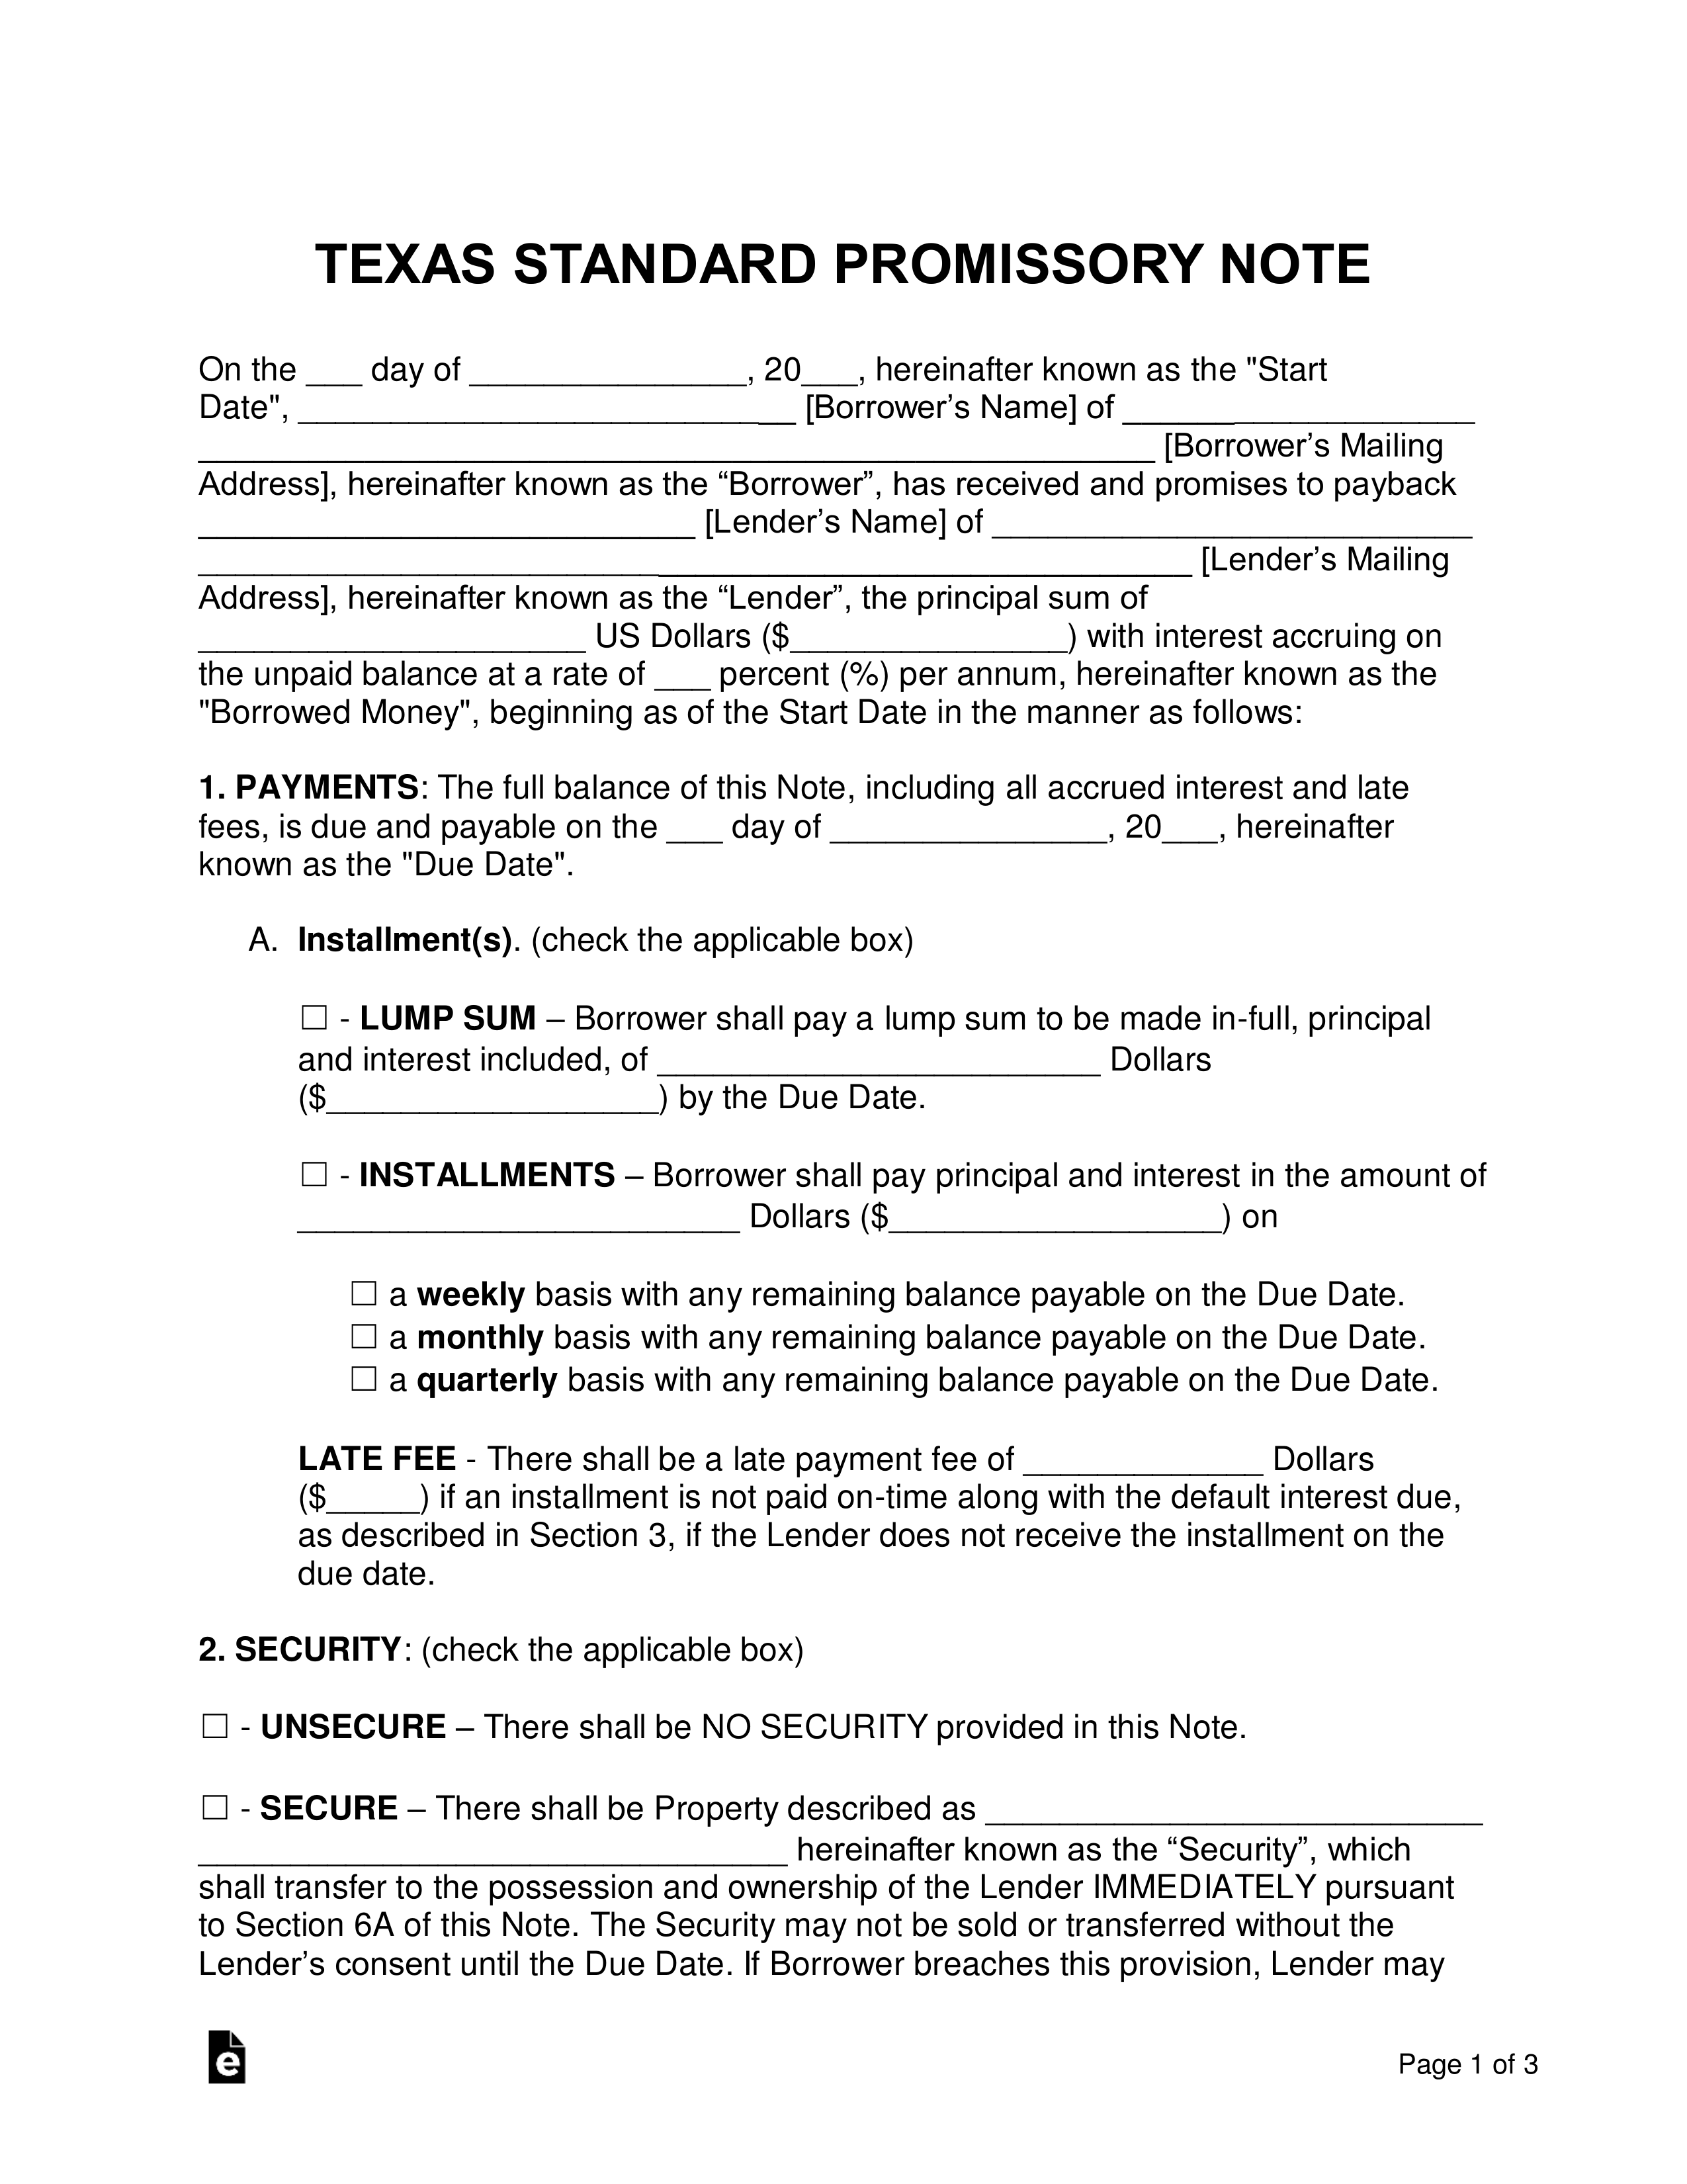 Texas Promissory Note Templates (2)